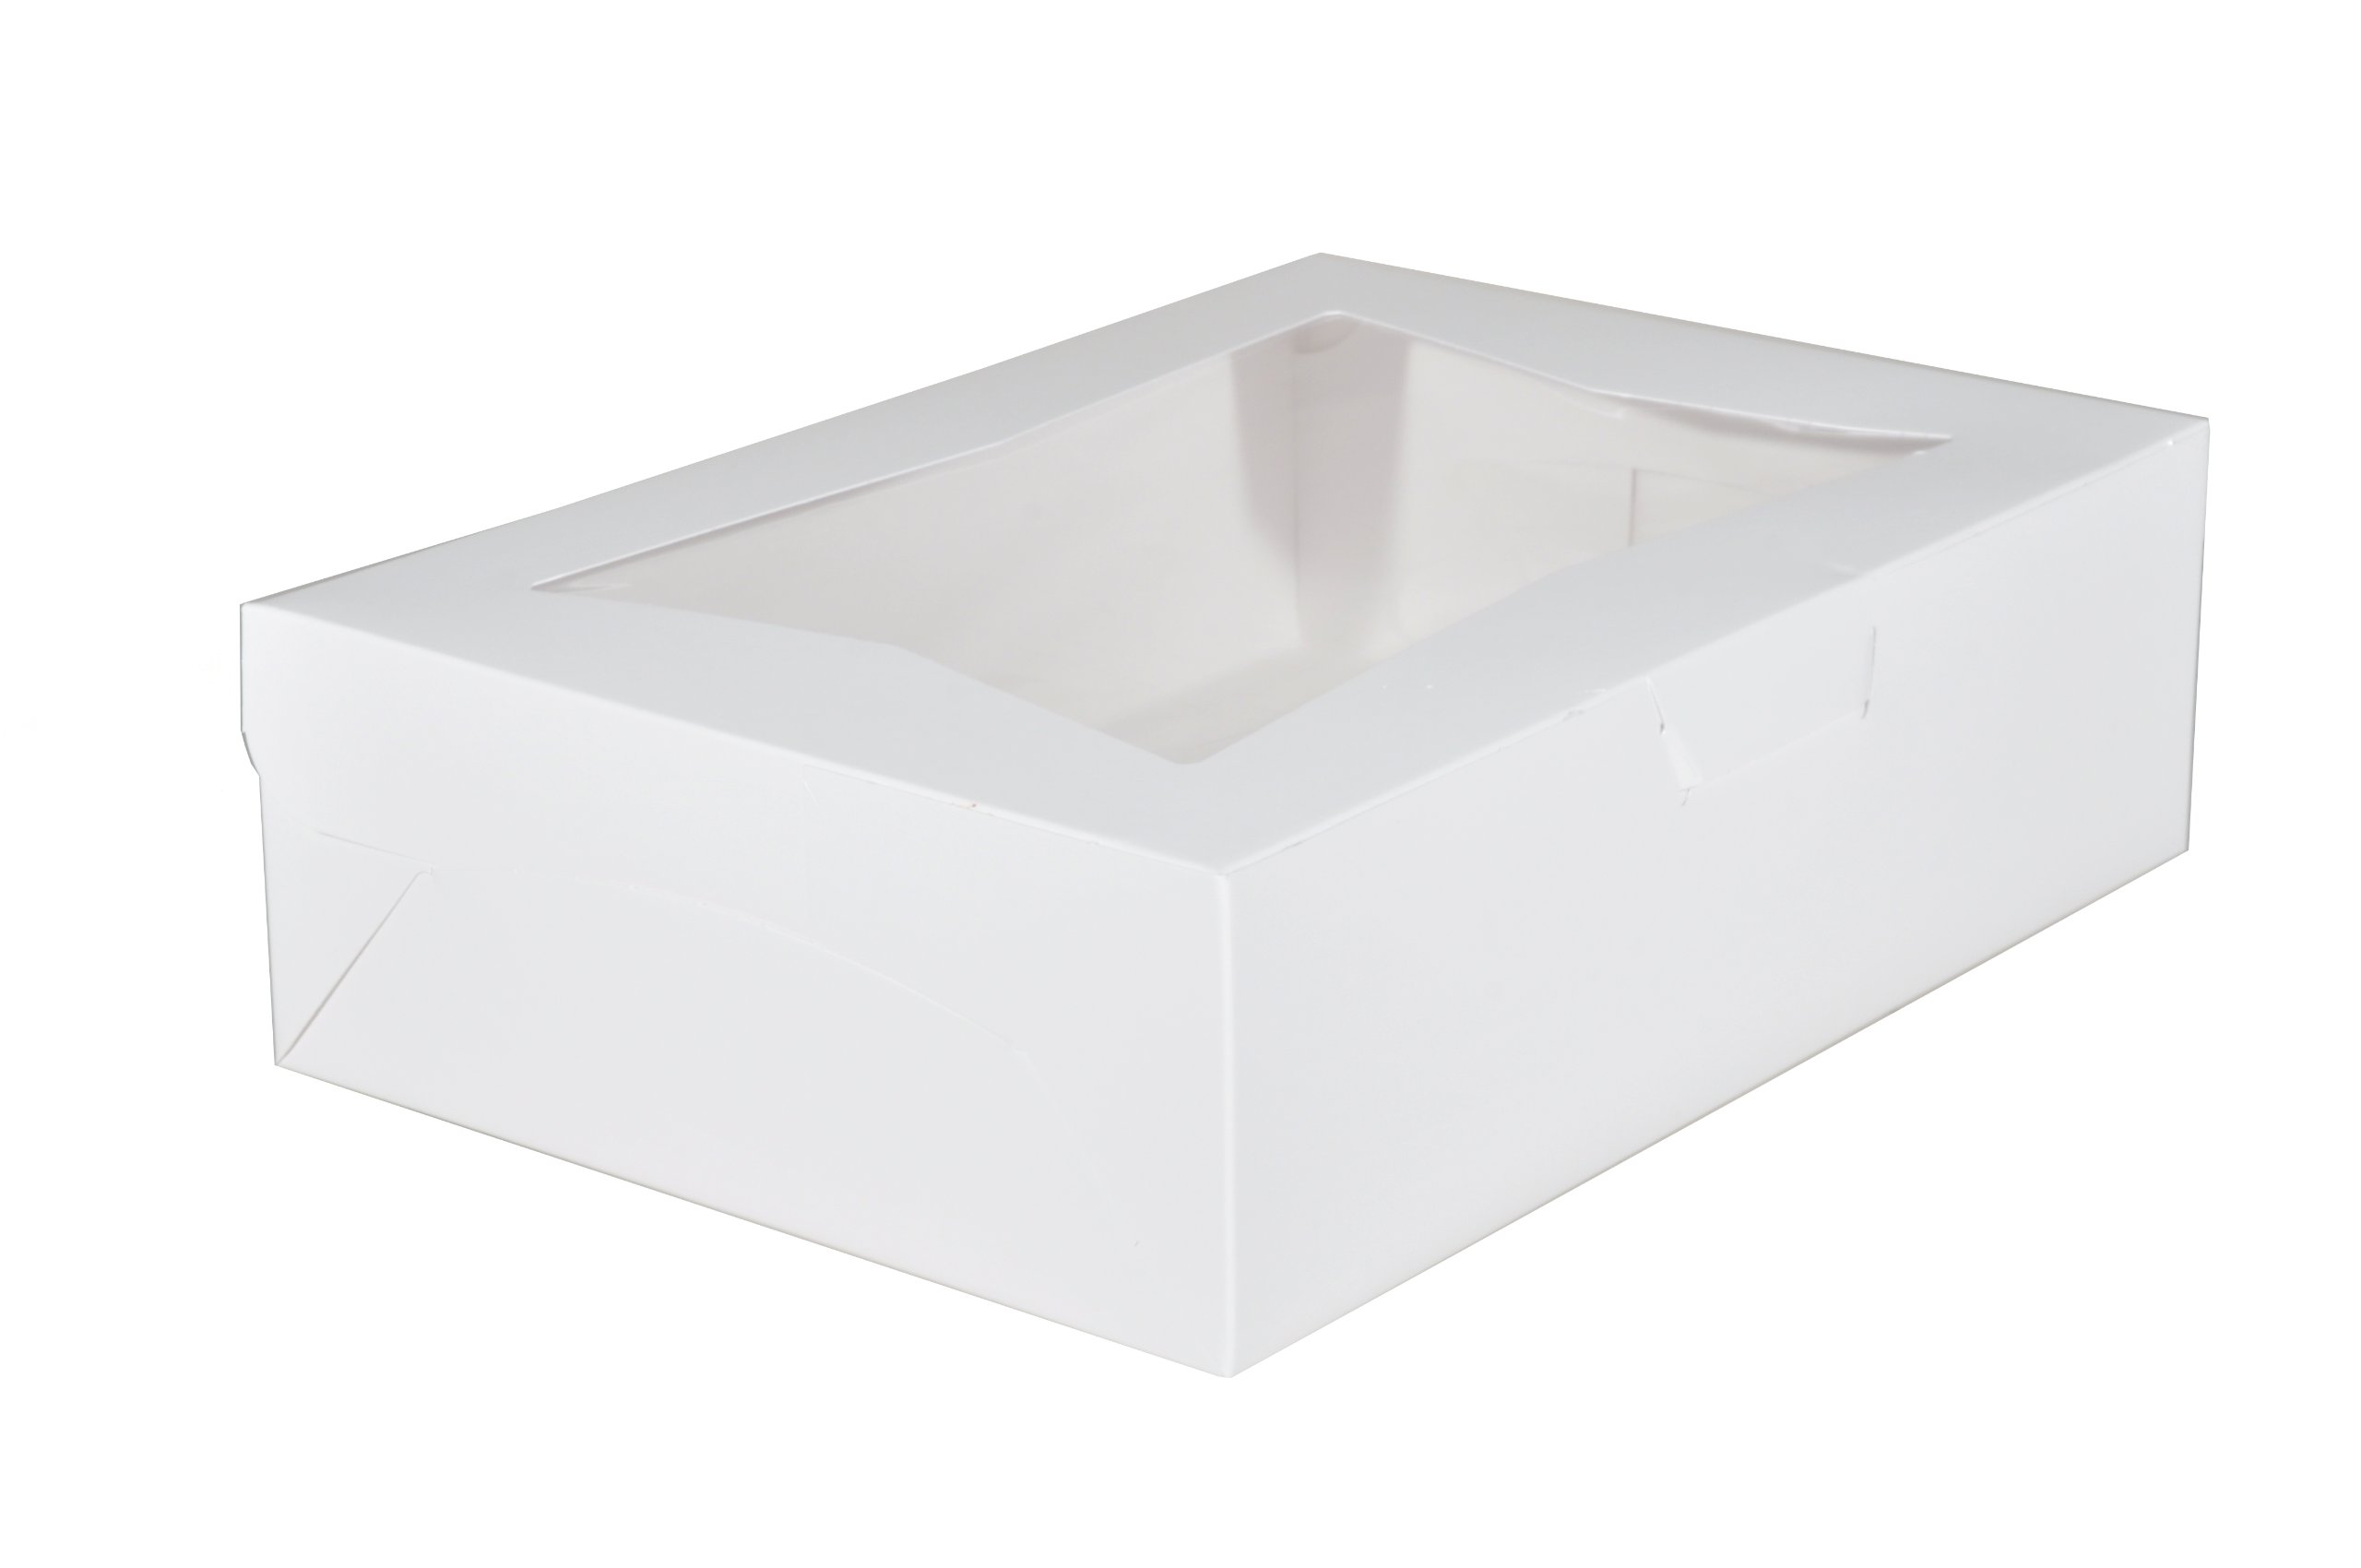 Southern Champion Tray 23093 纸板白色带锁角窗面包盒，14' 长 x 10' 宽 x 4' 高（每箱 100 个）